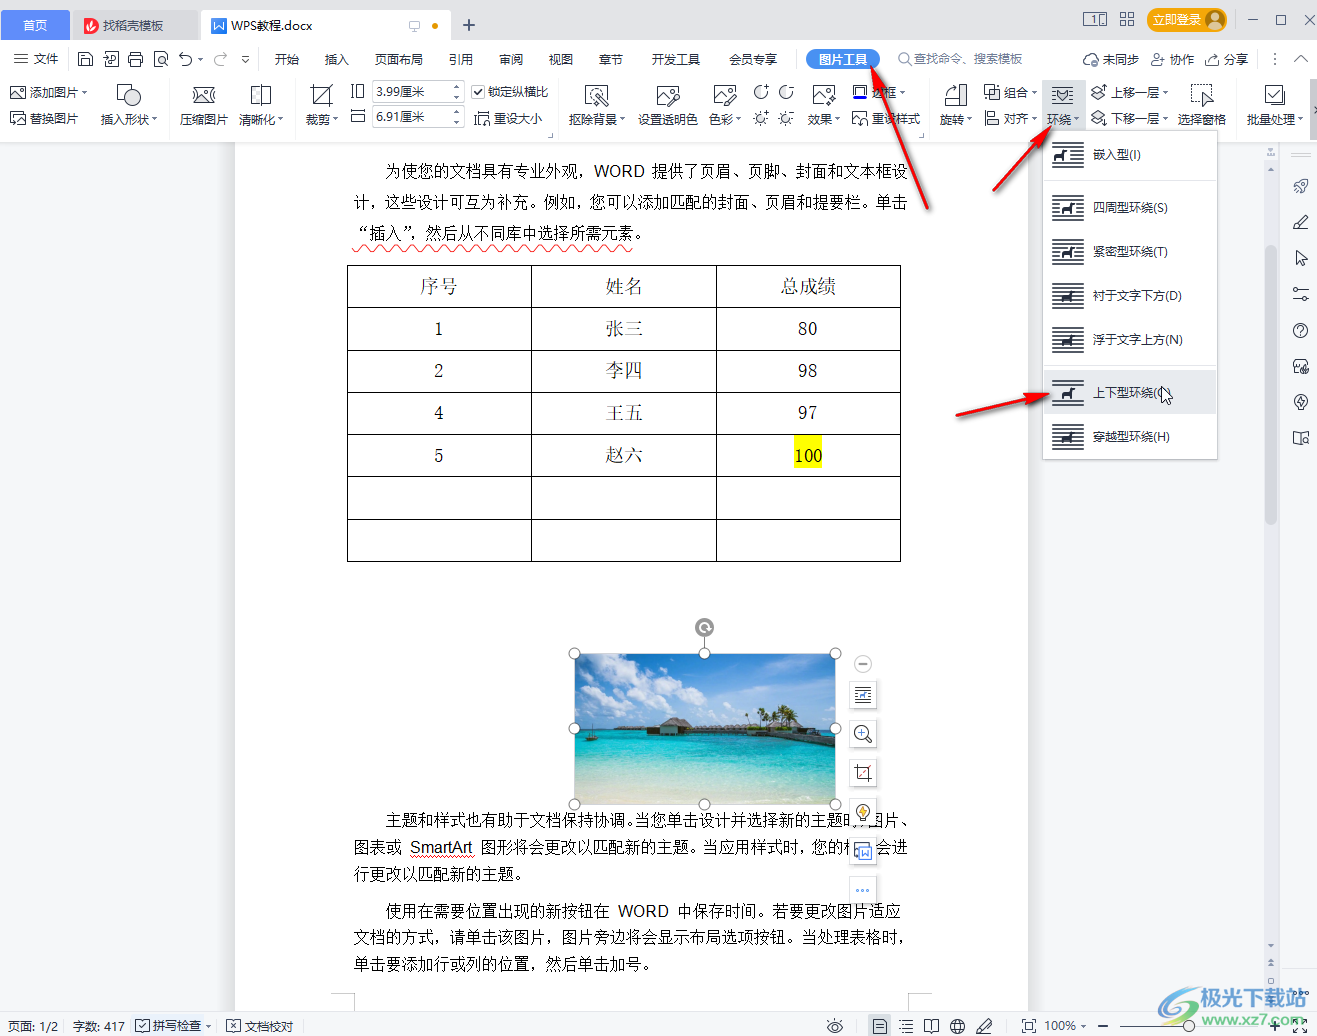 Excel表格图片无法显示如何解决-Excel表格解决图片无法显示的方法教程 - 极光下载站